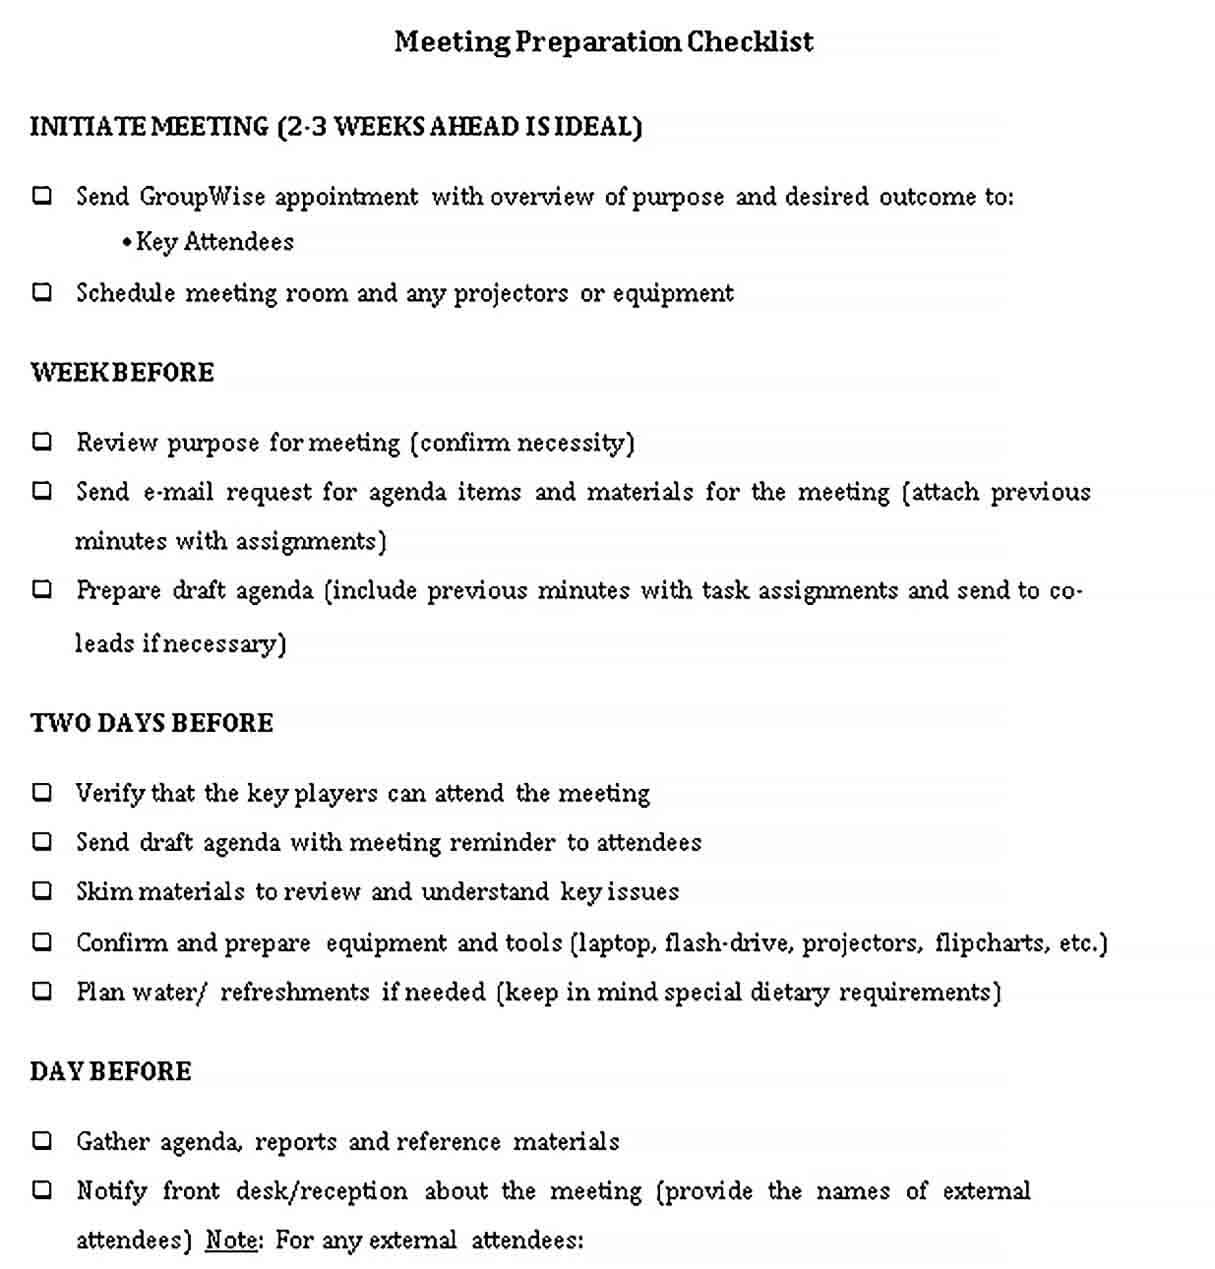 Sample Meeting Preparation Checklist Template 1